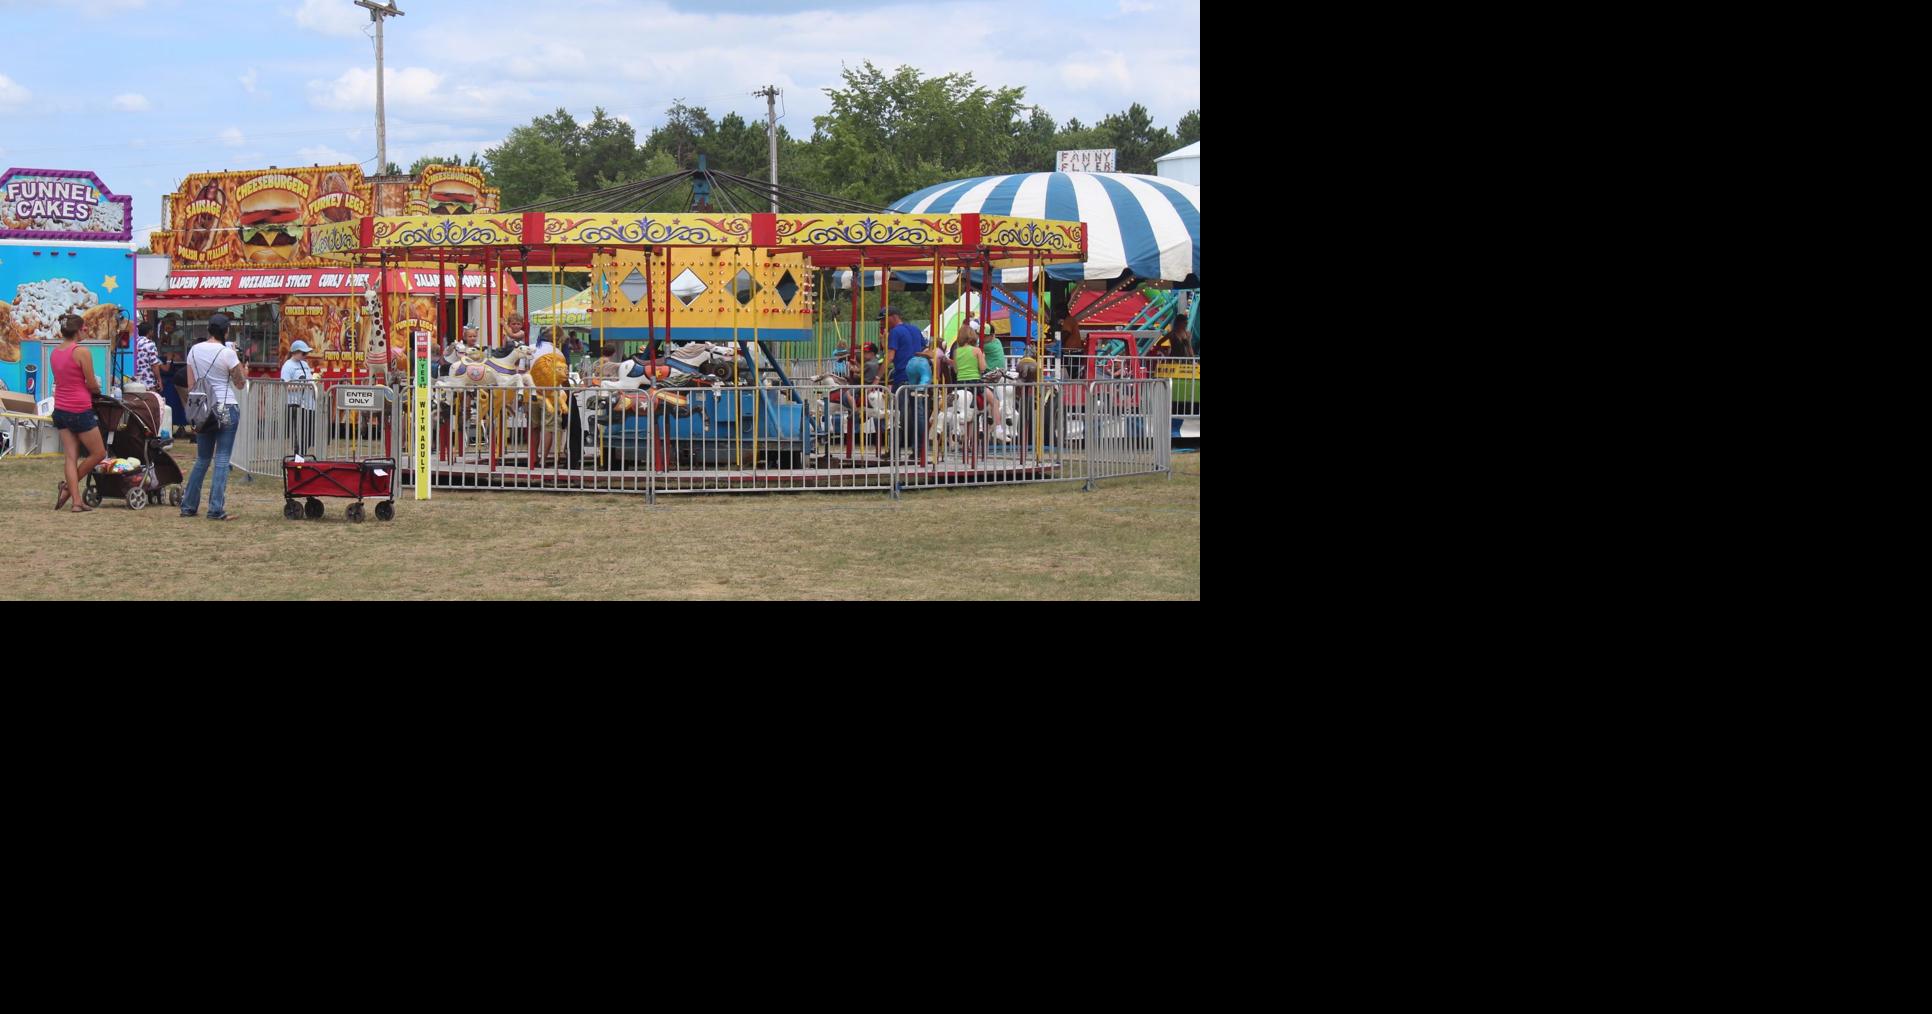 2020 Bayfield County Fair may go virtual Subscriber